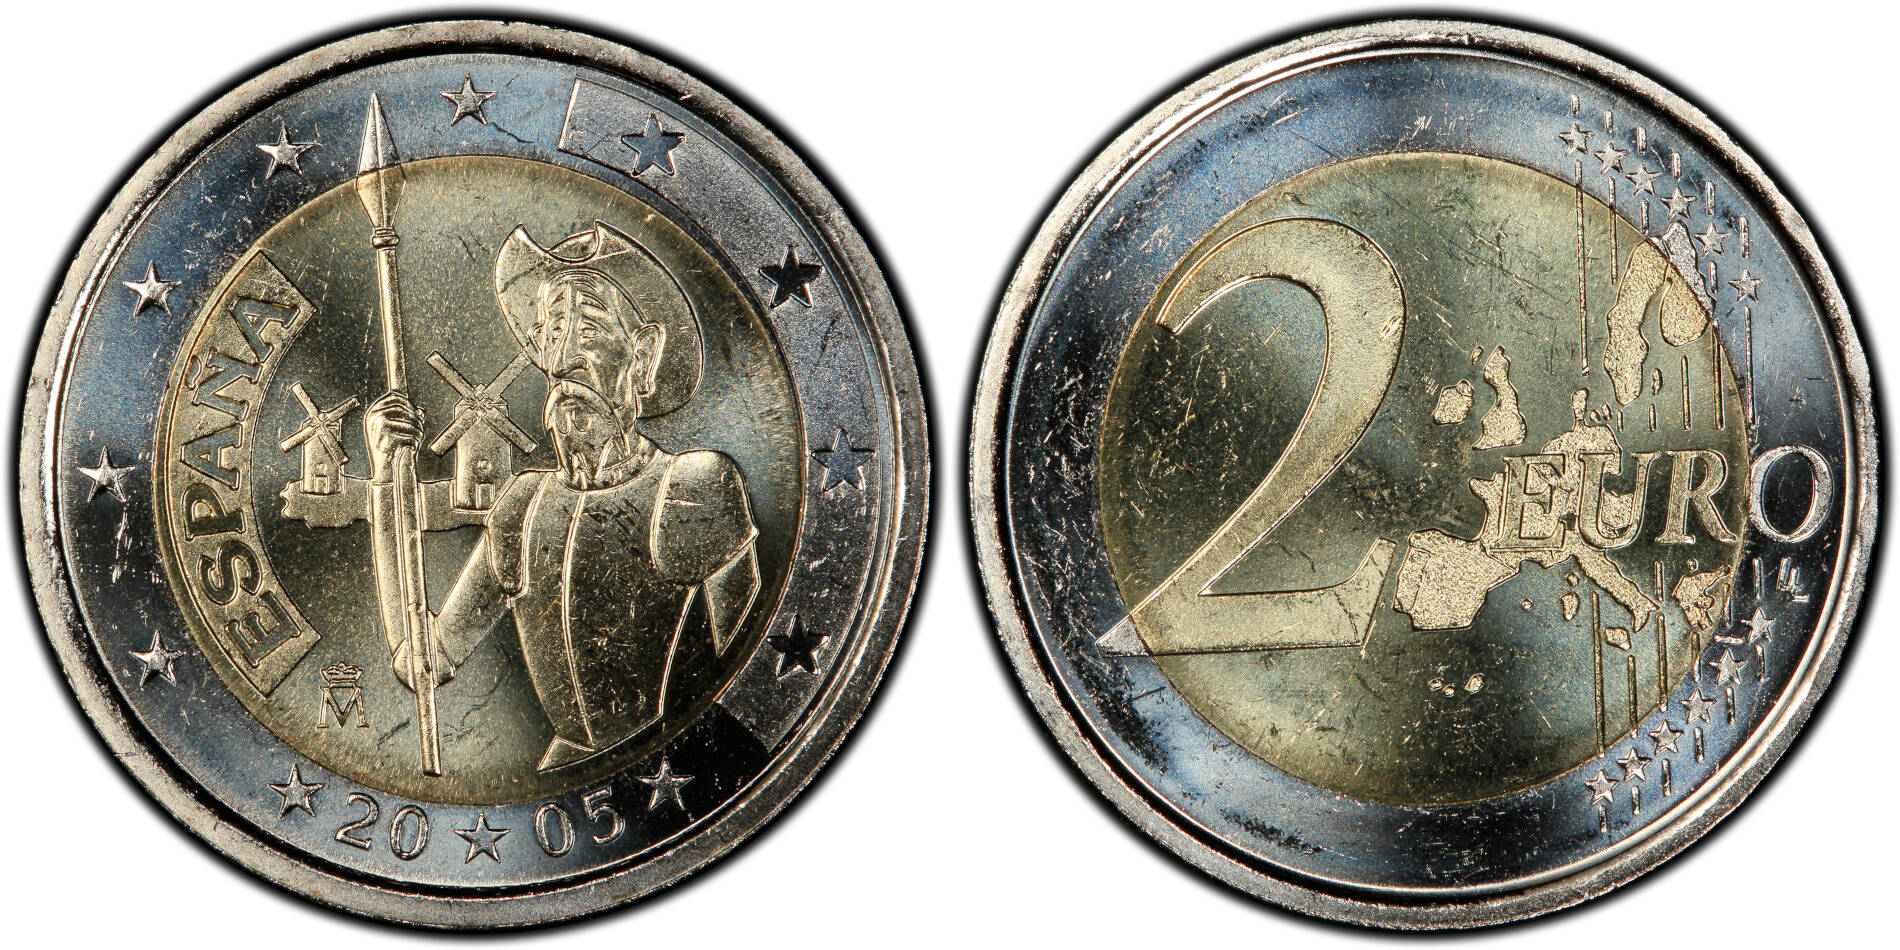 Spain 2 Euro 2005 Don Quixote - Special 2 euro coins